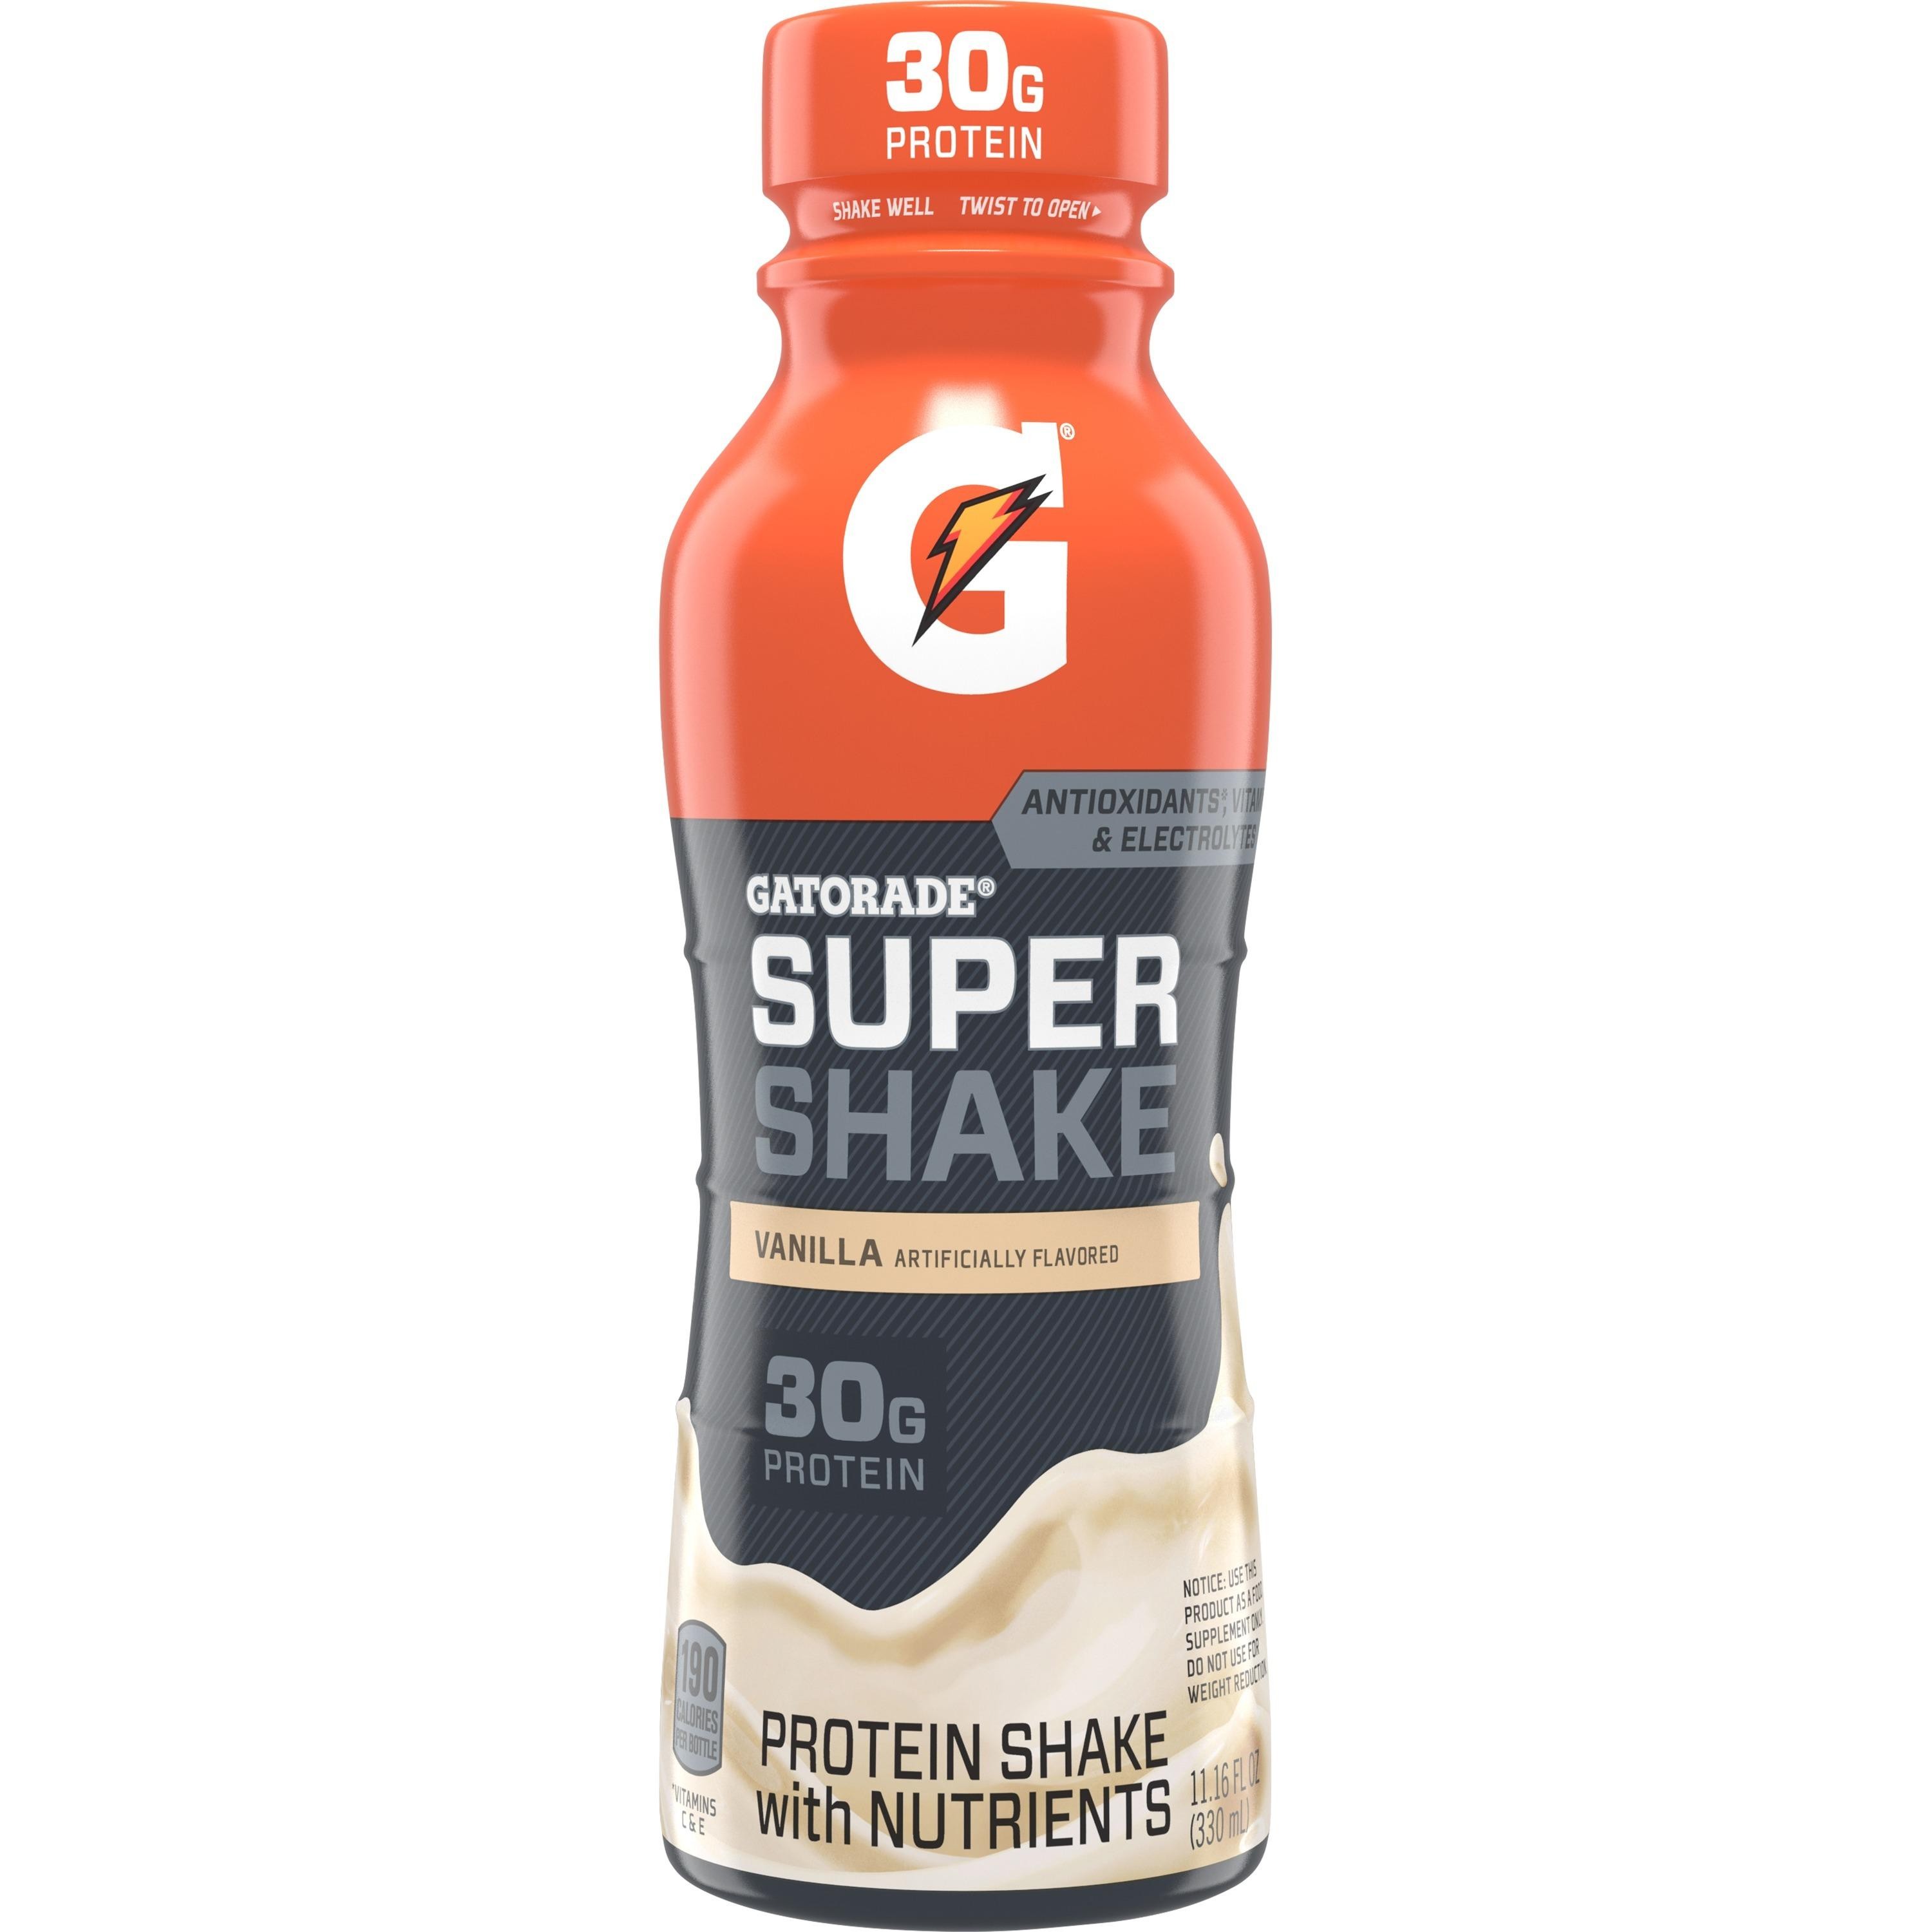 Super Shake